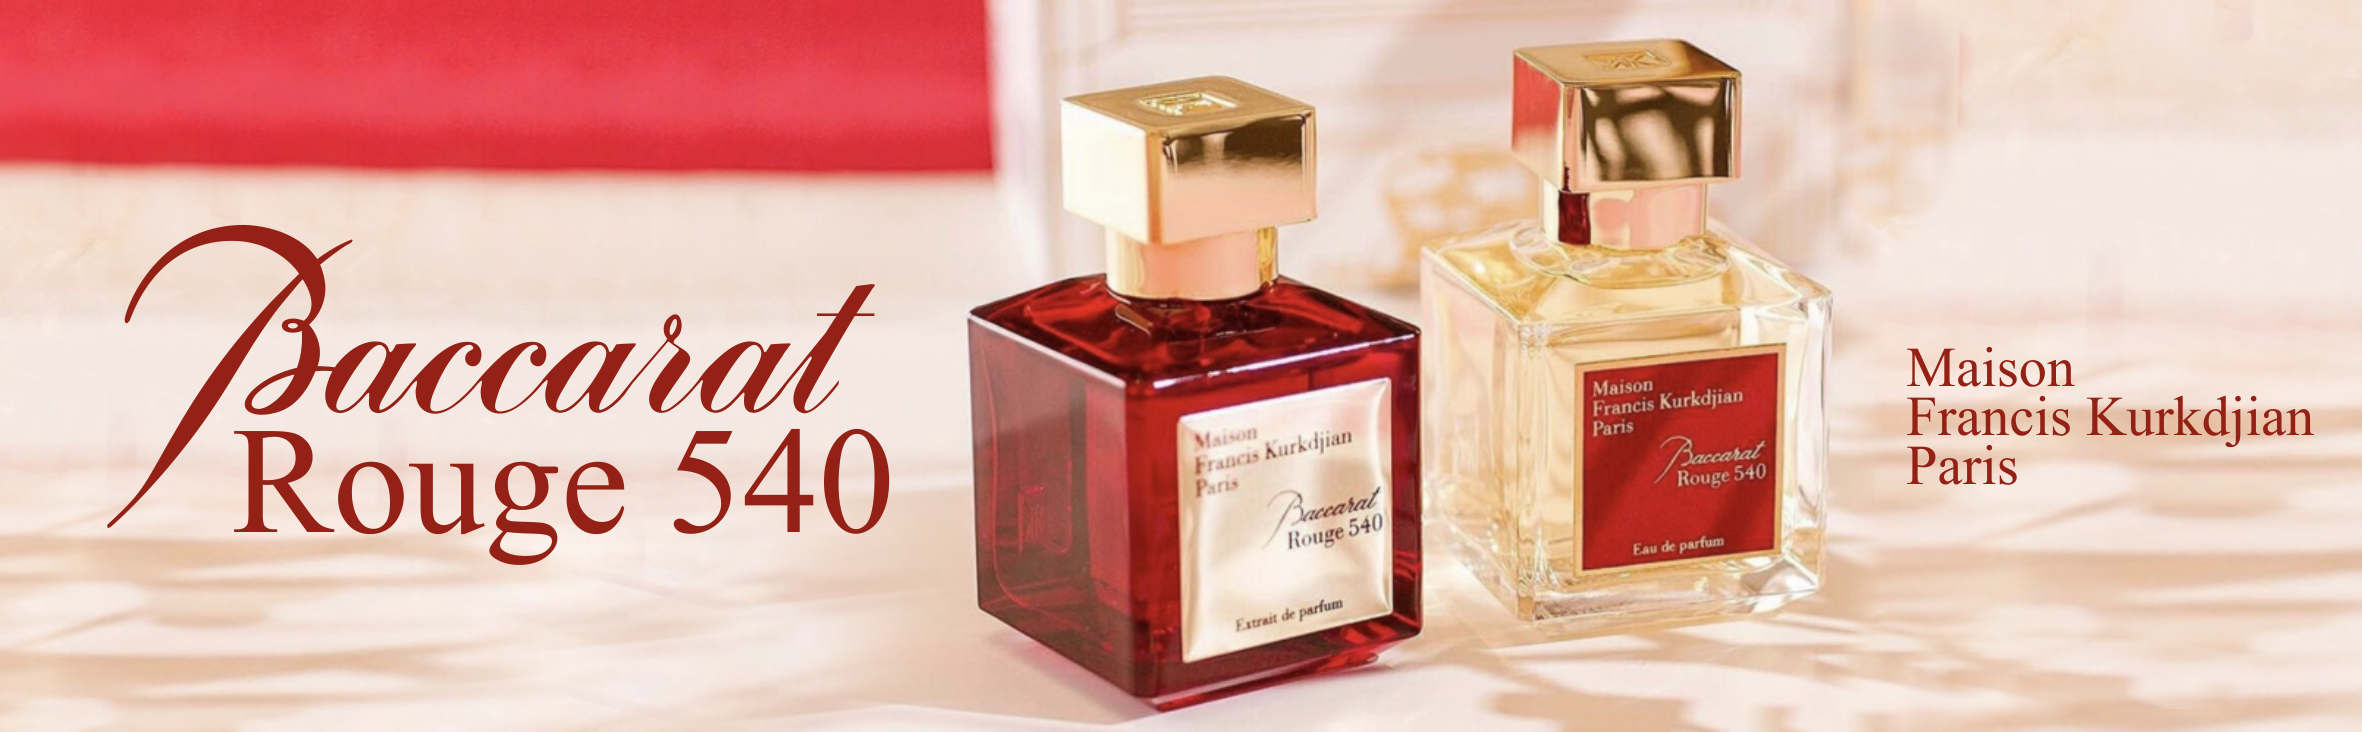 The Perfume Shop ZW: Designer Fragrances, Cosmetics & Gifts